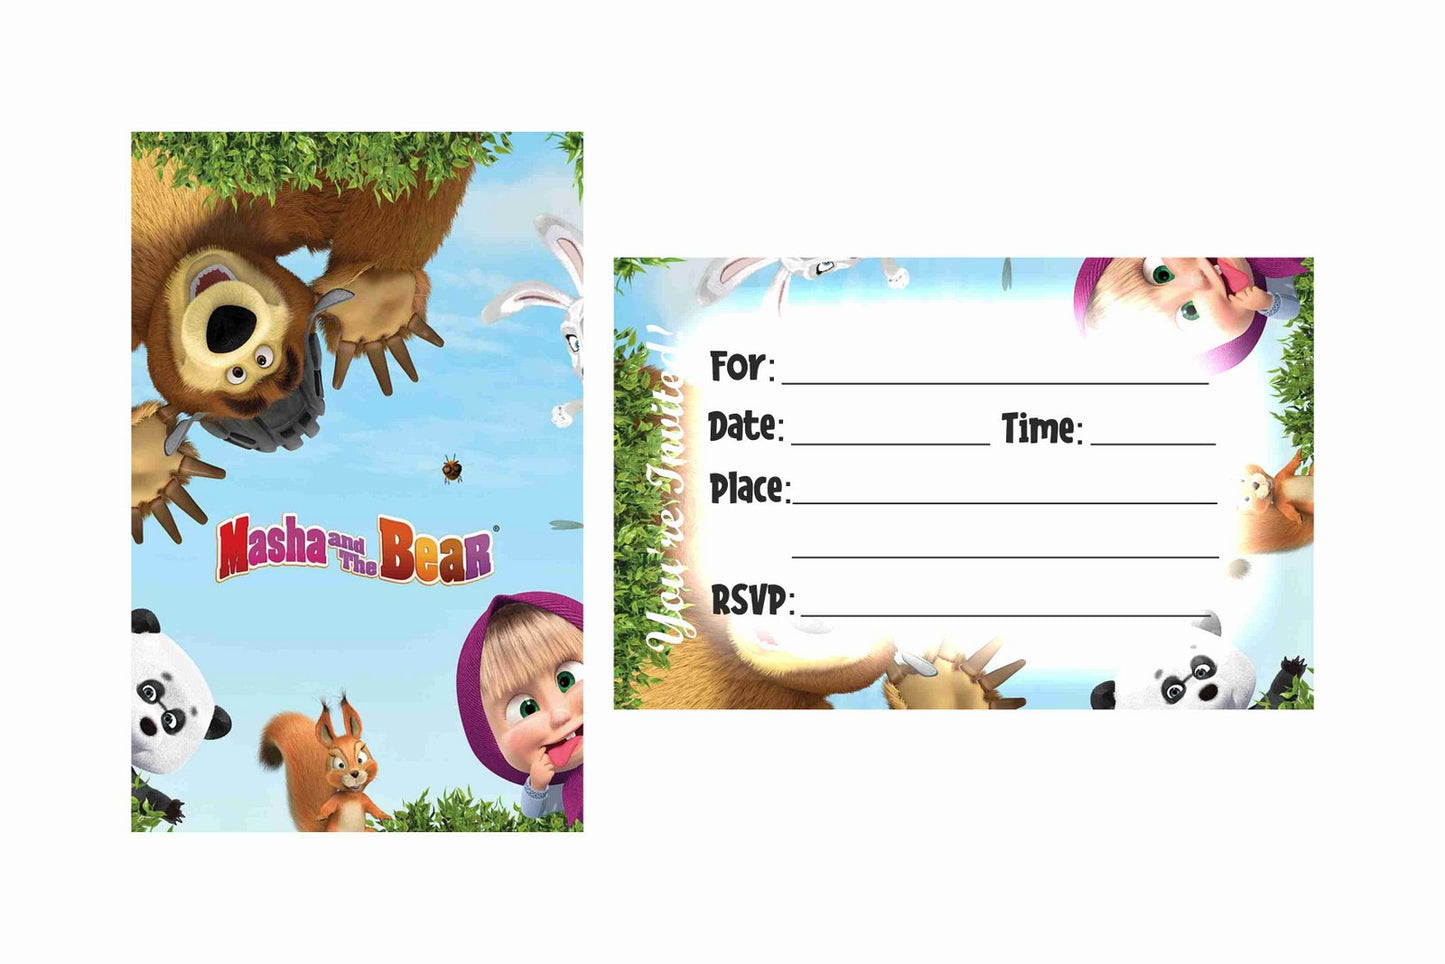 Masha Bear Theme Children's Birthday Party Invitations Cards with Envelopes - Kids Birthday Party Invitations for Boys or Girls,- Invitation Cards (Pack of 10)